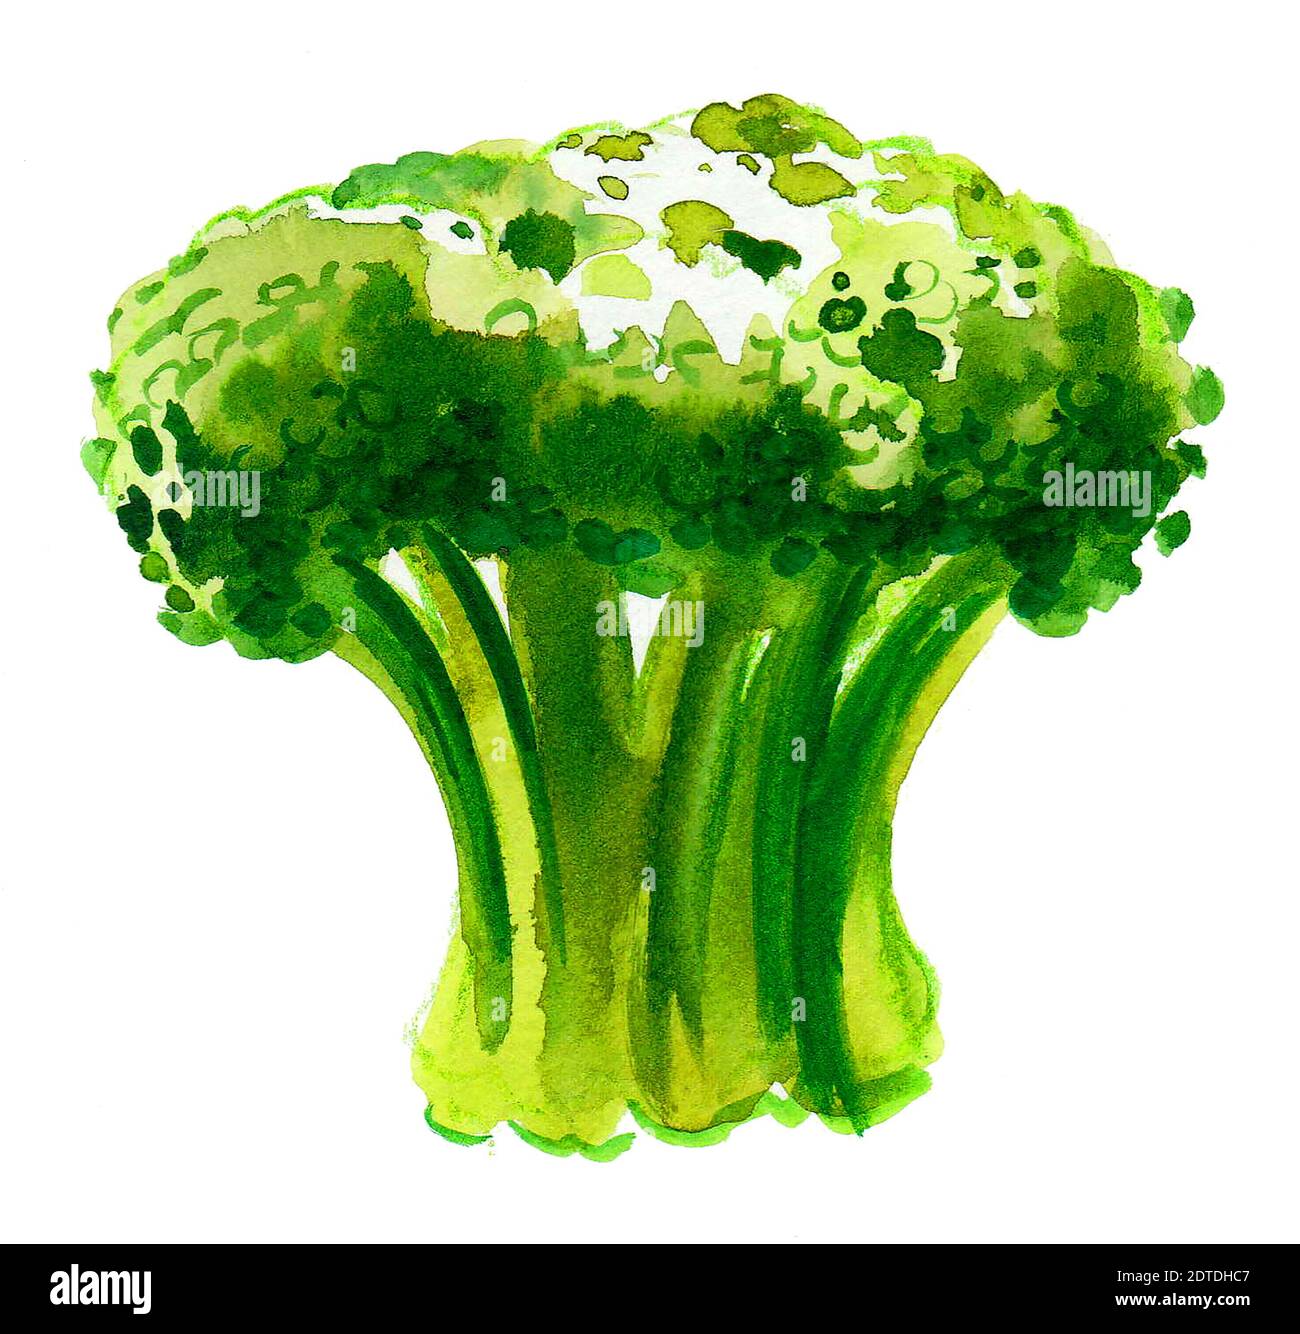 Bund grüner Brokkoli. Aquarellmalerei Stockfoto